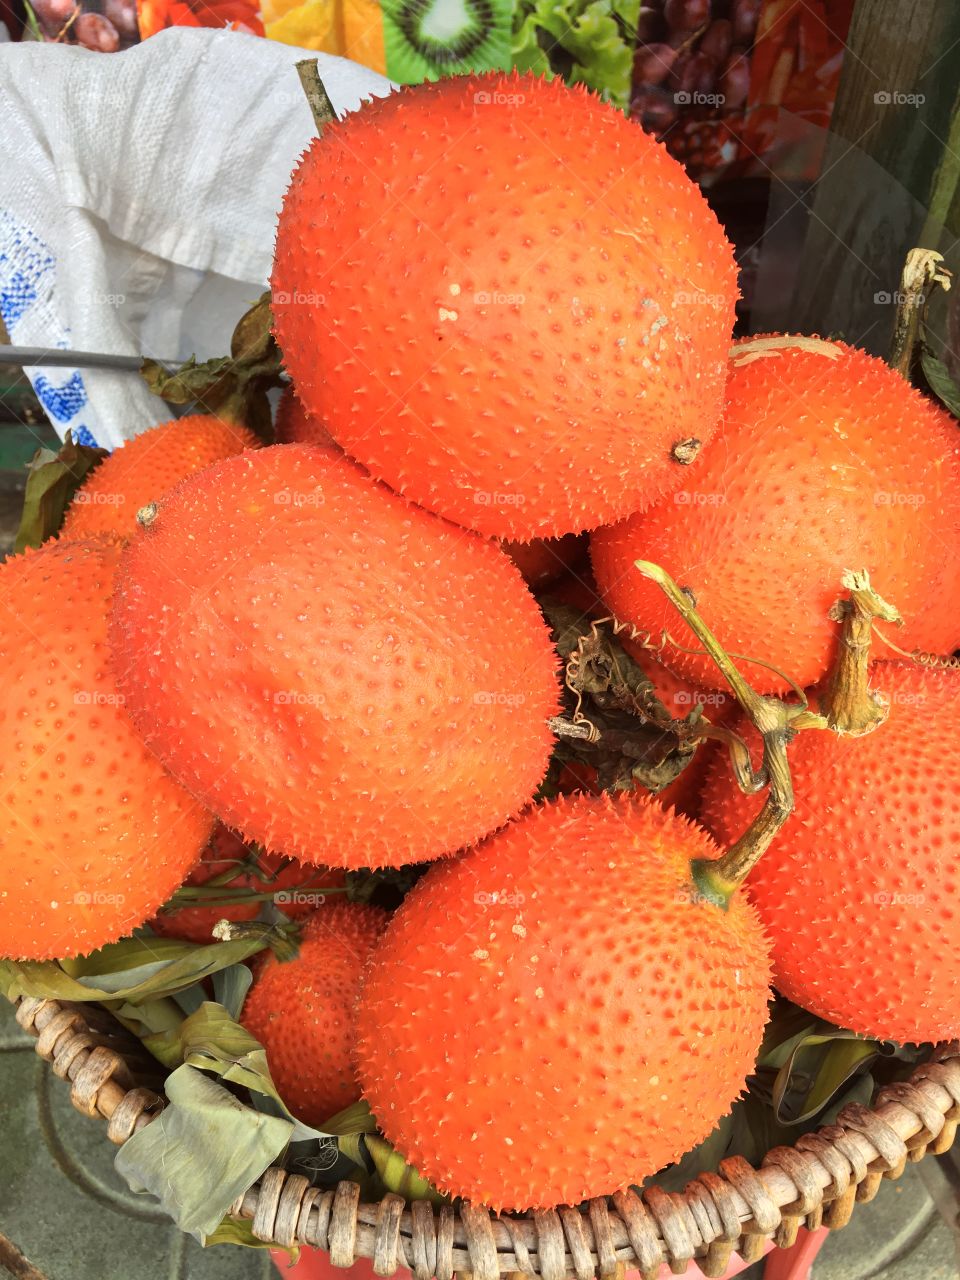 Monordica or "Gac" fruit